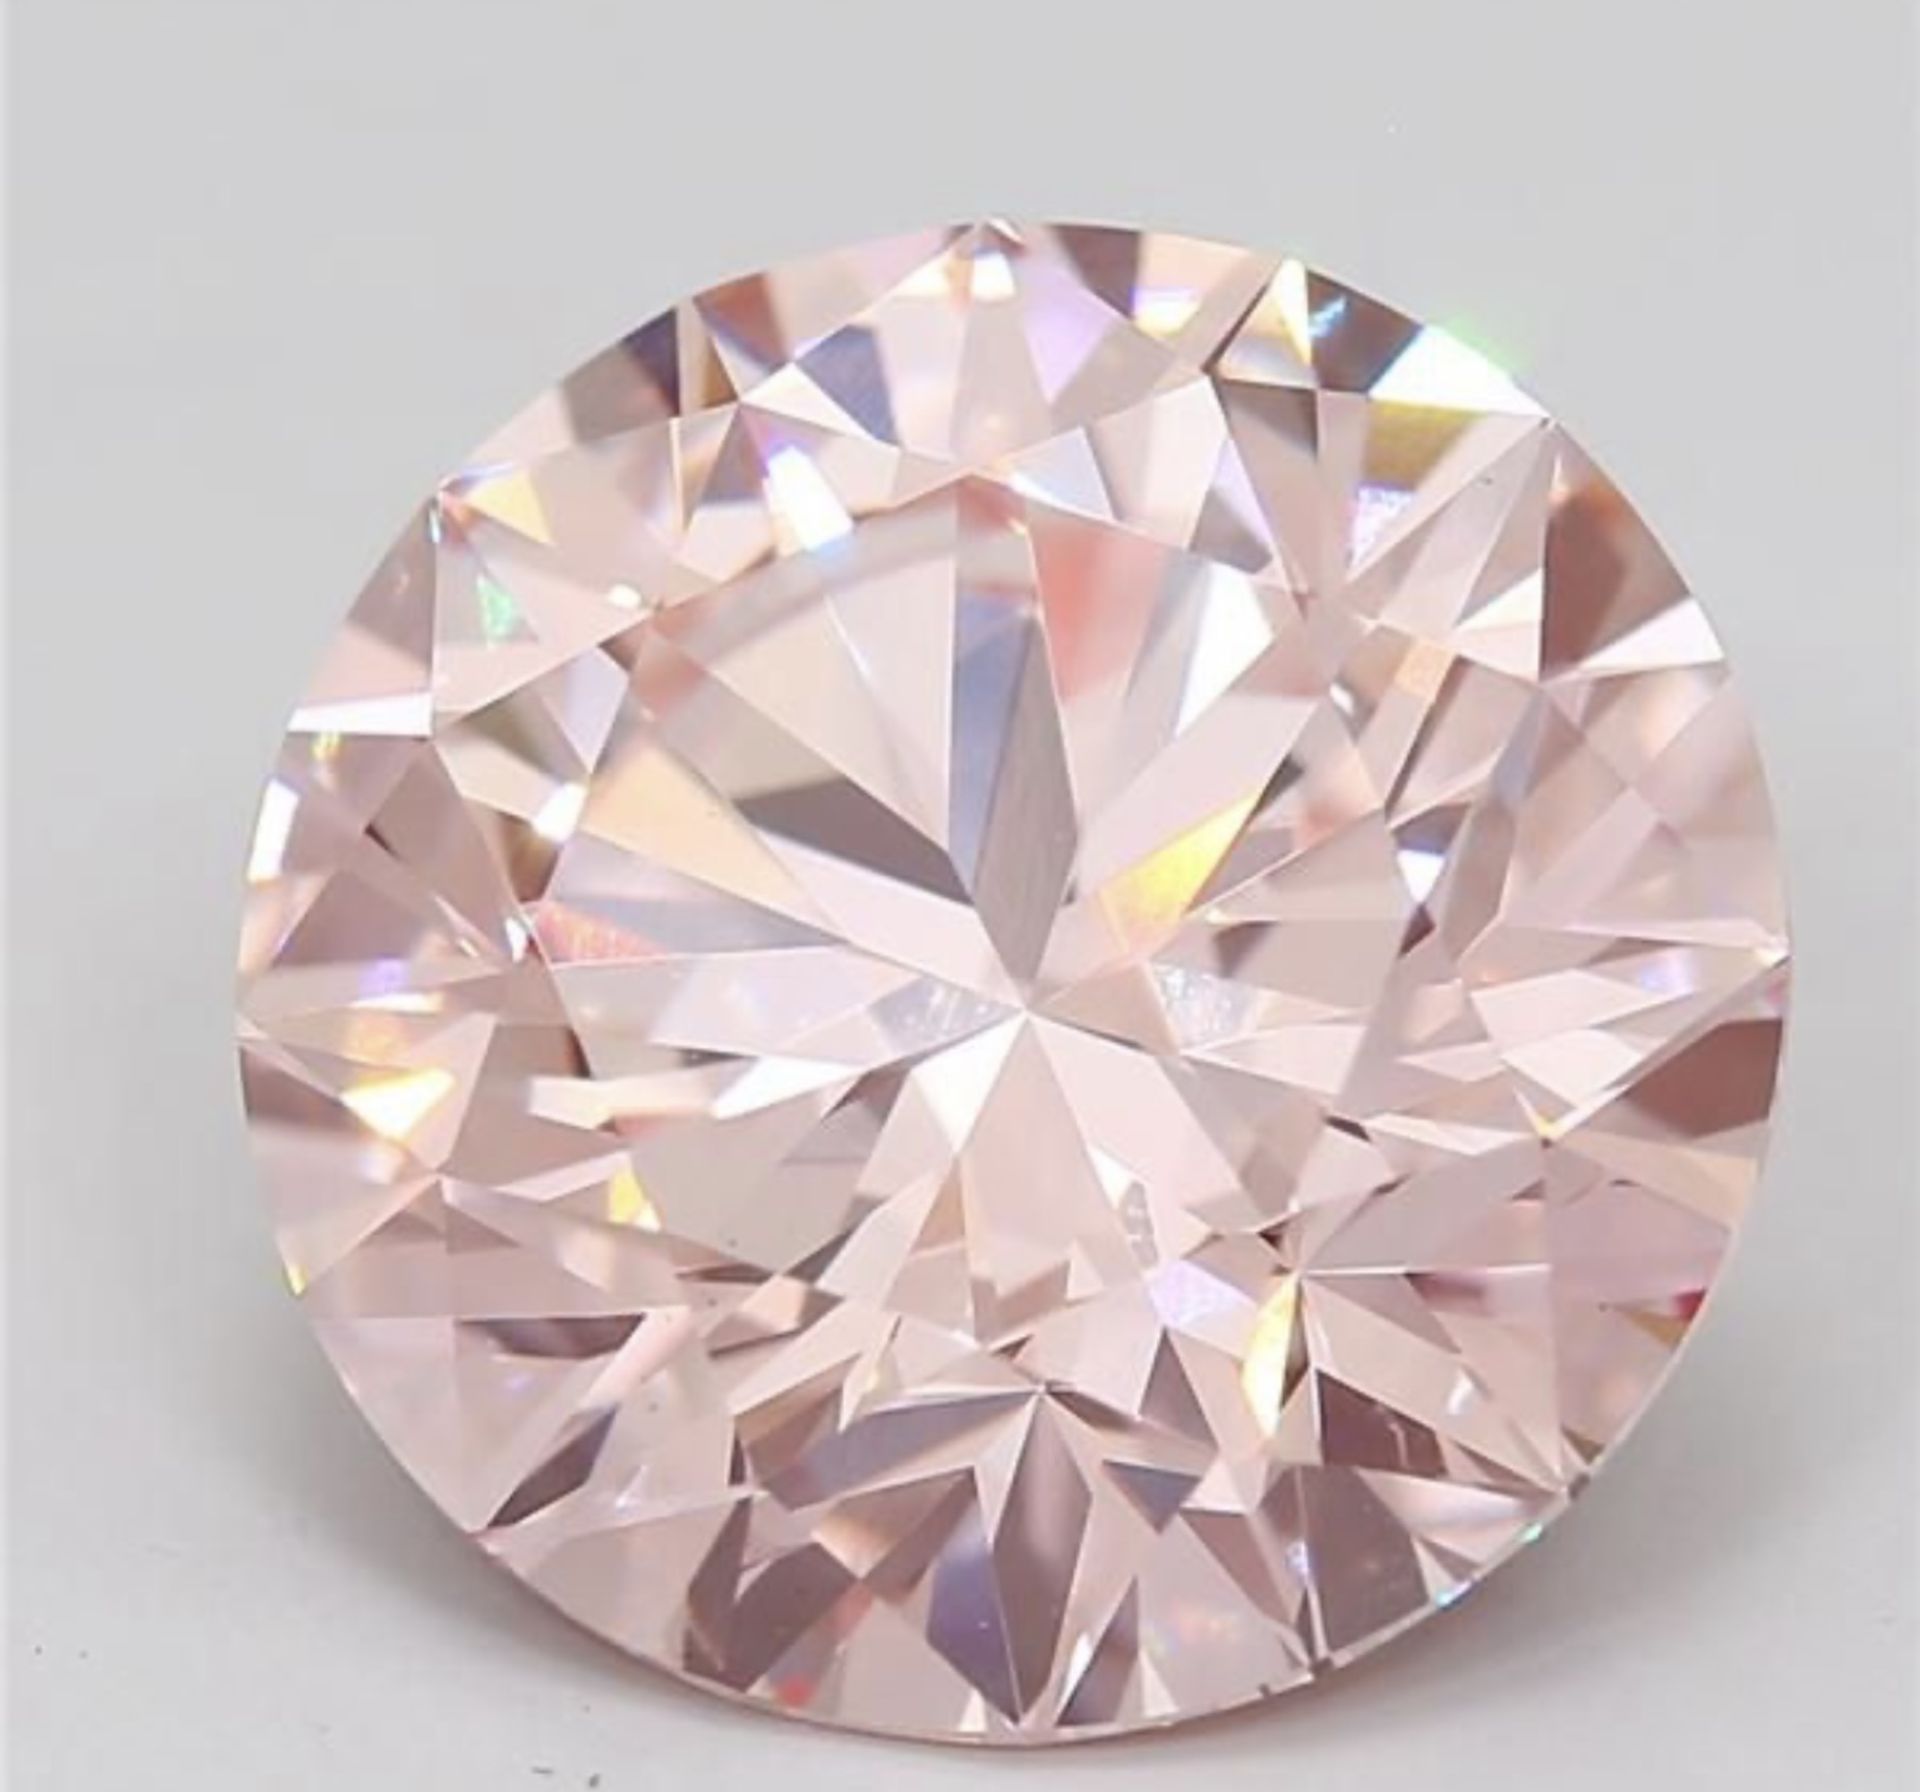 Round Brilliant Cut Diamond 7.42 Carat Fancy Pink Colour VS1 Clarity - IGI Certificate